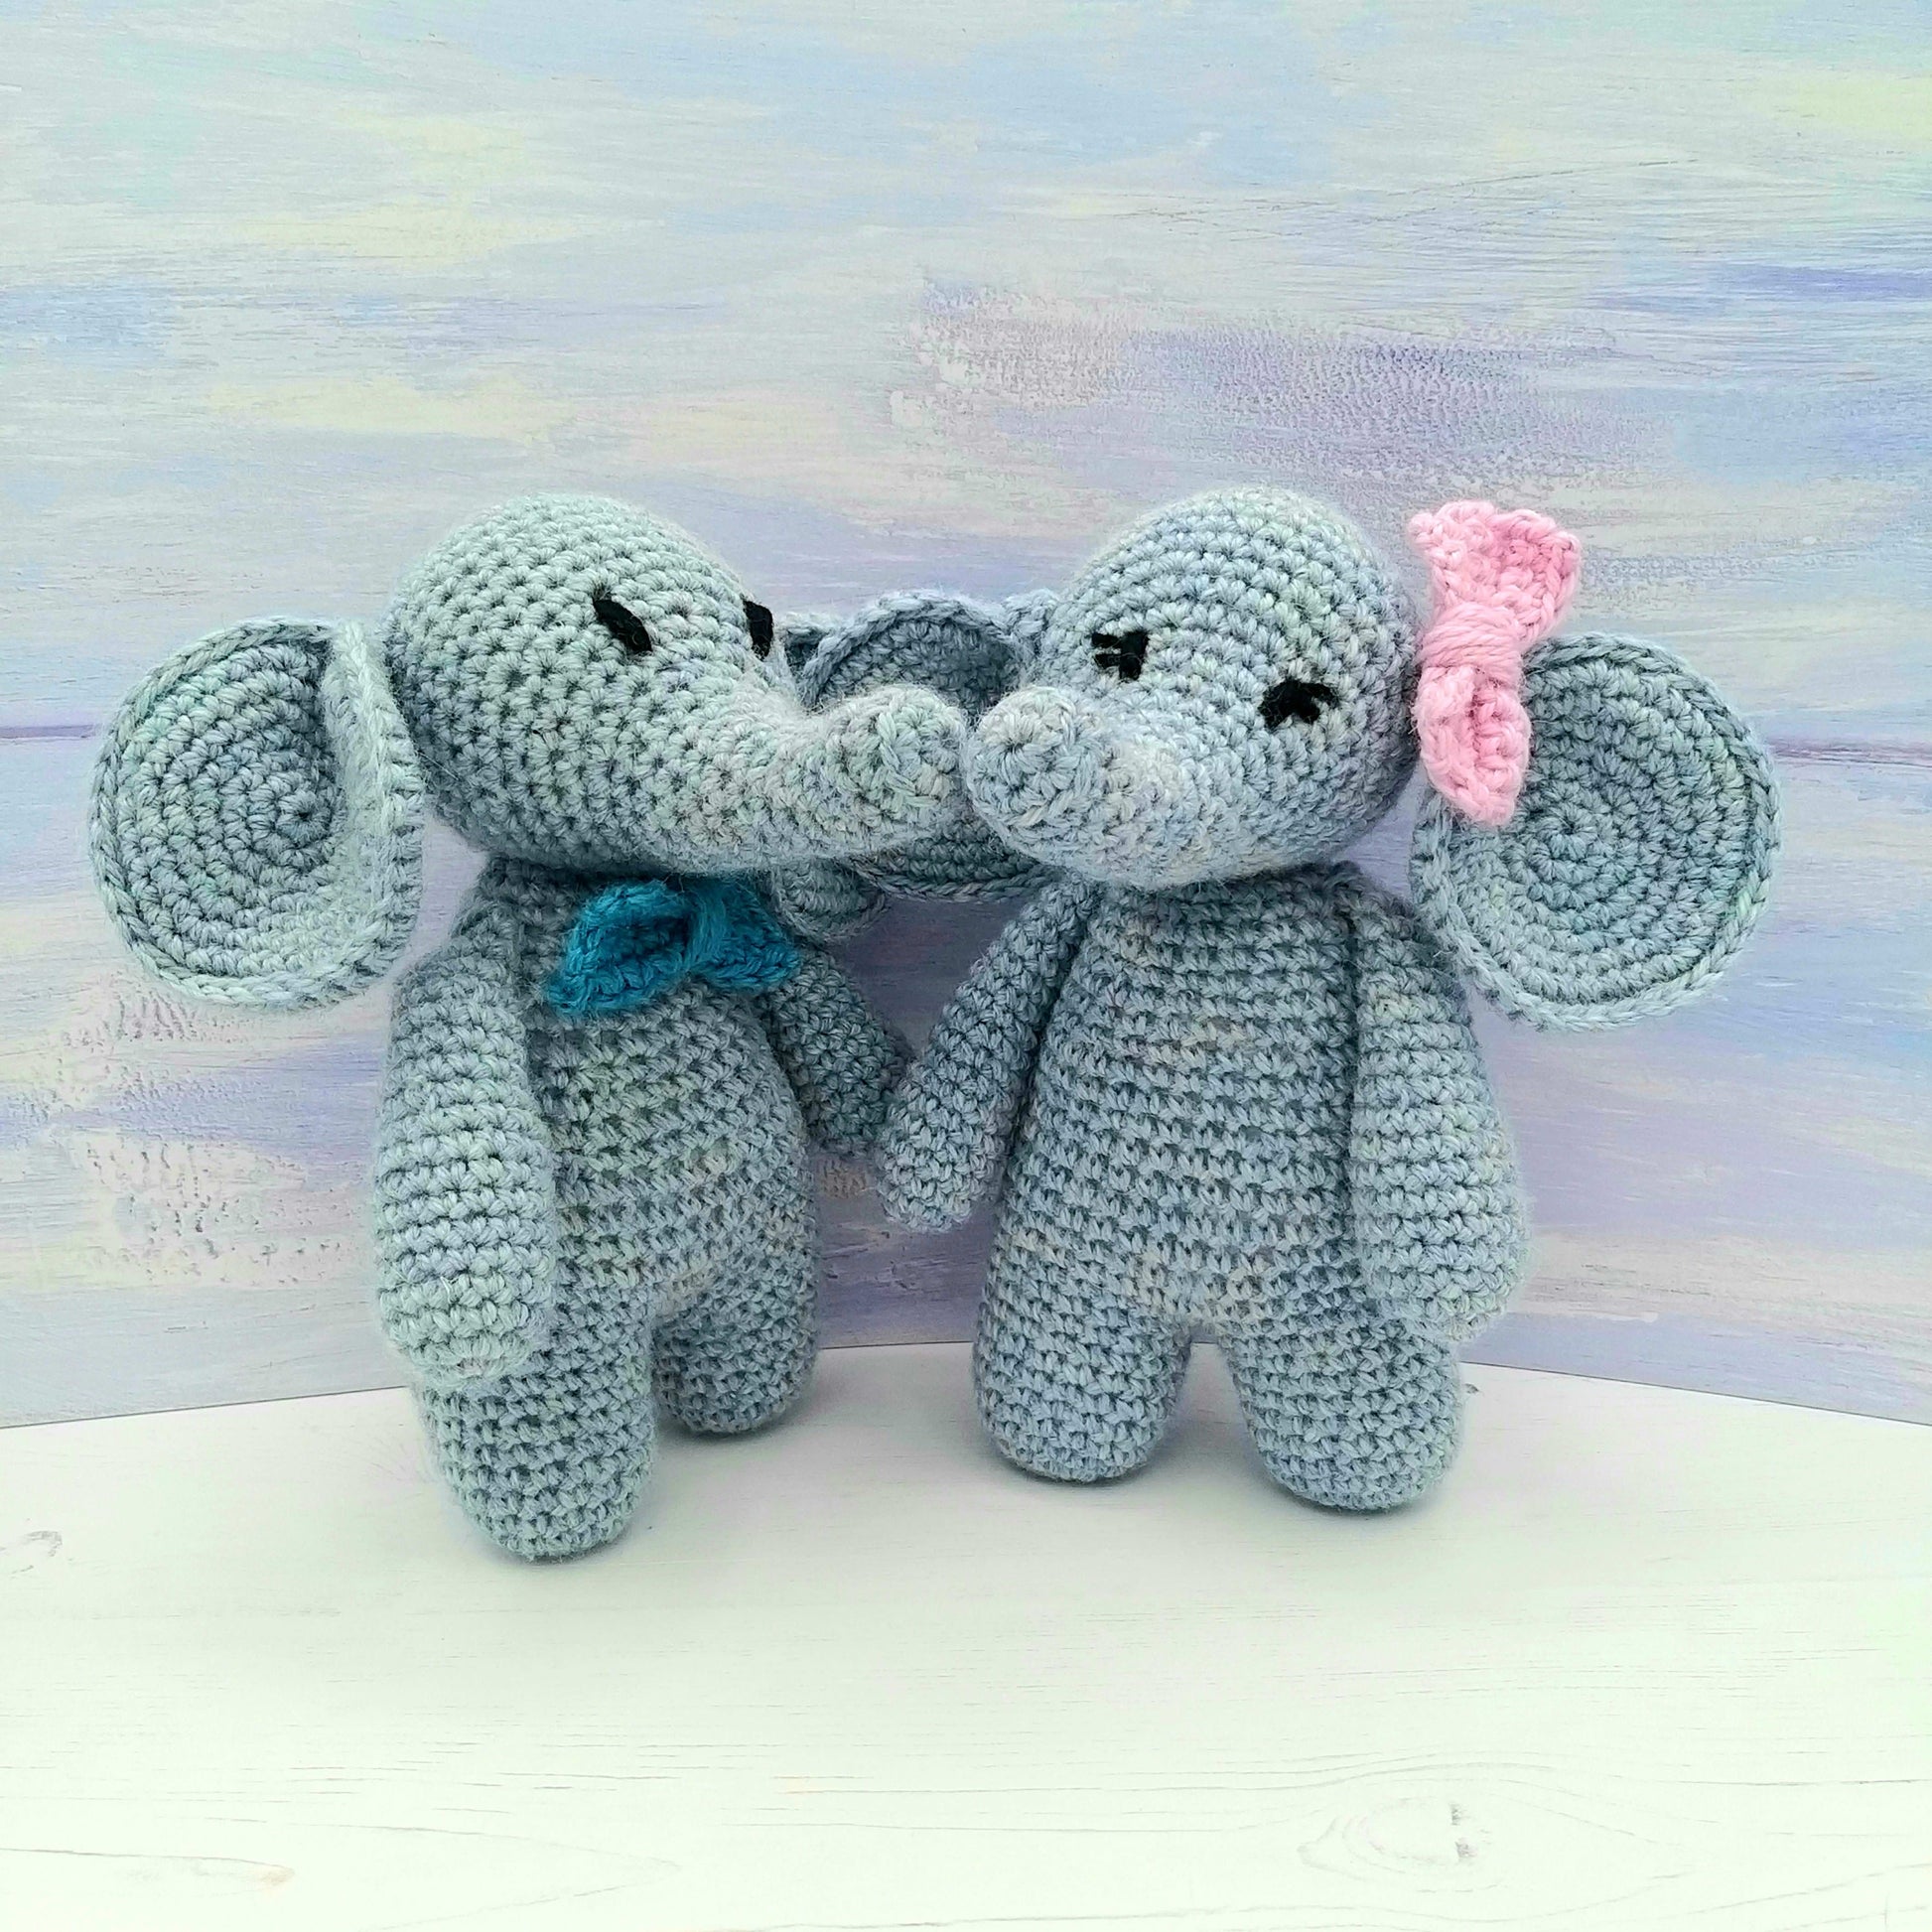 Finished toy crochet elephants